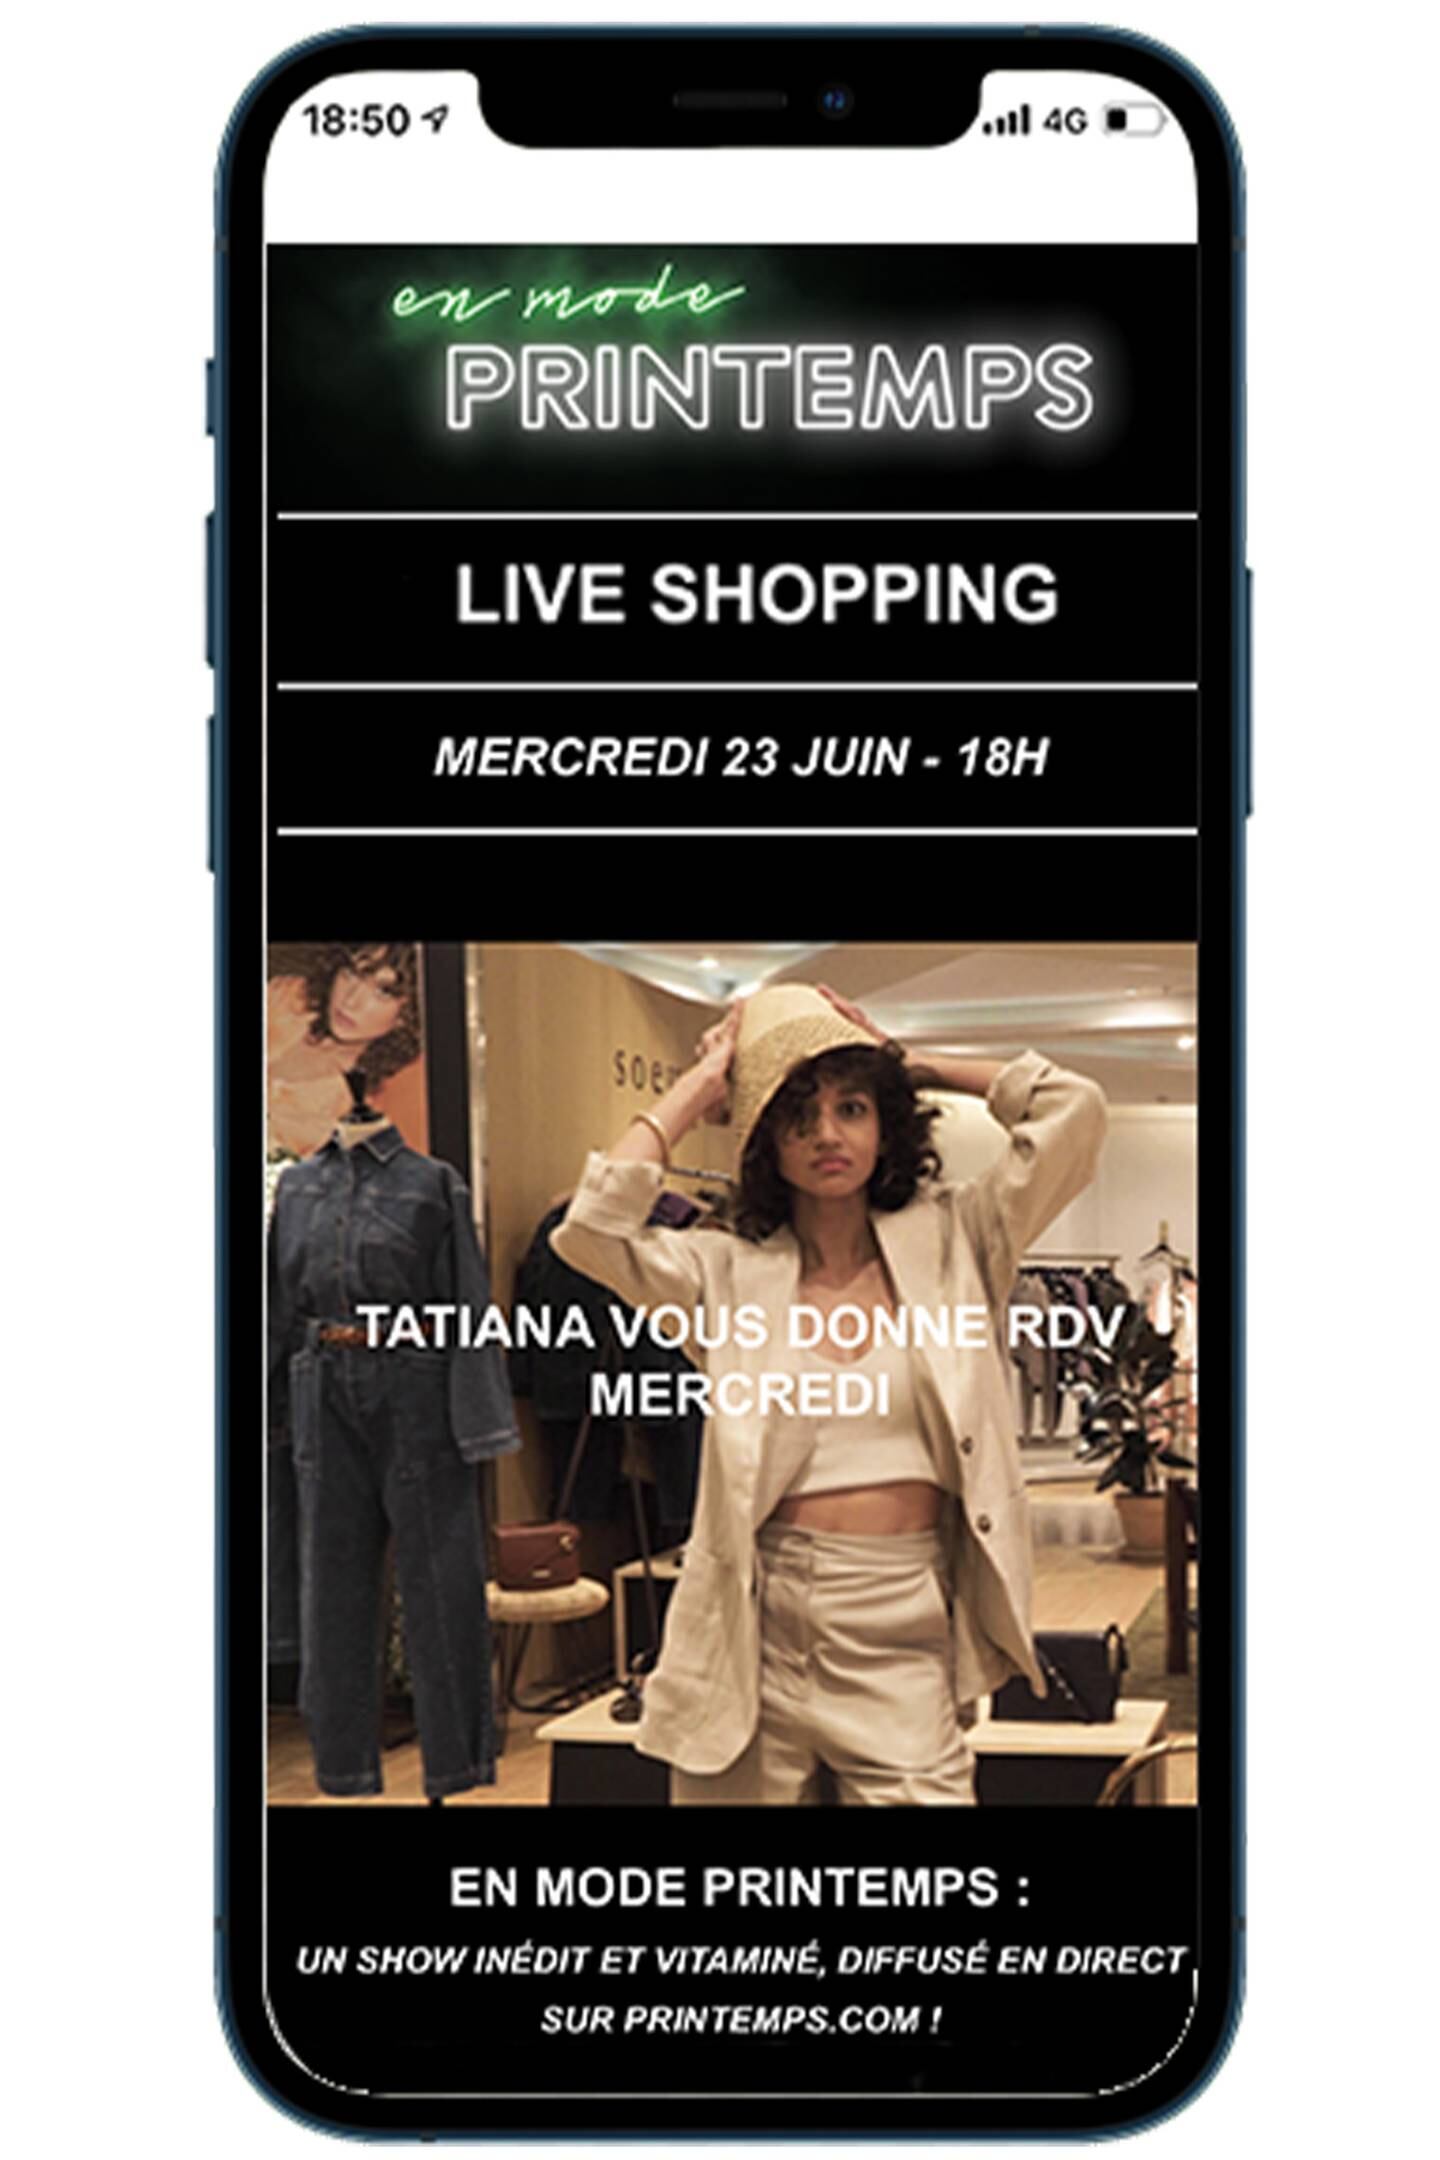 Printemps launches livestream shopping. Printemps.